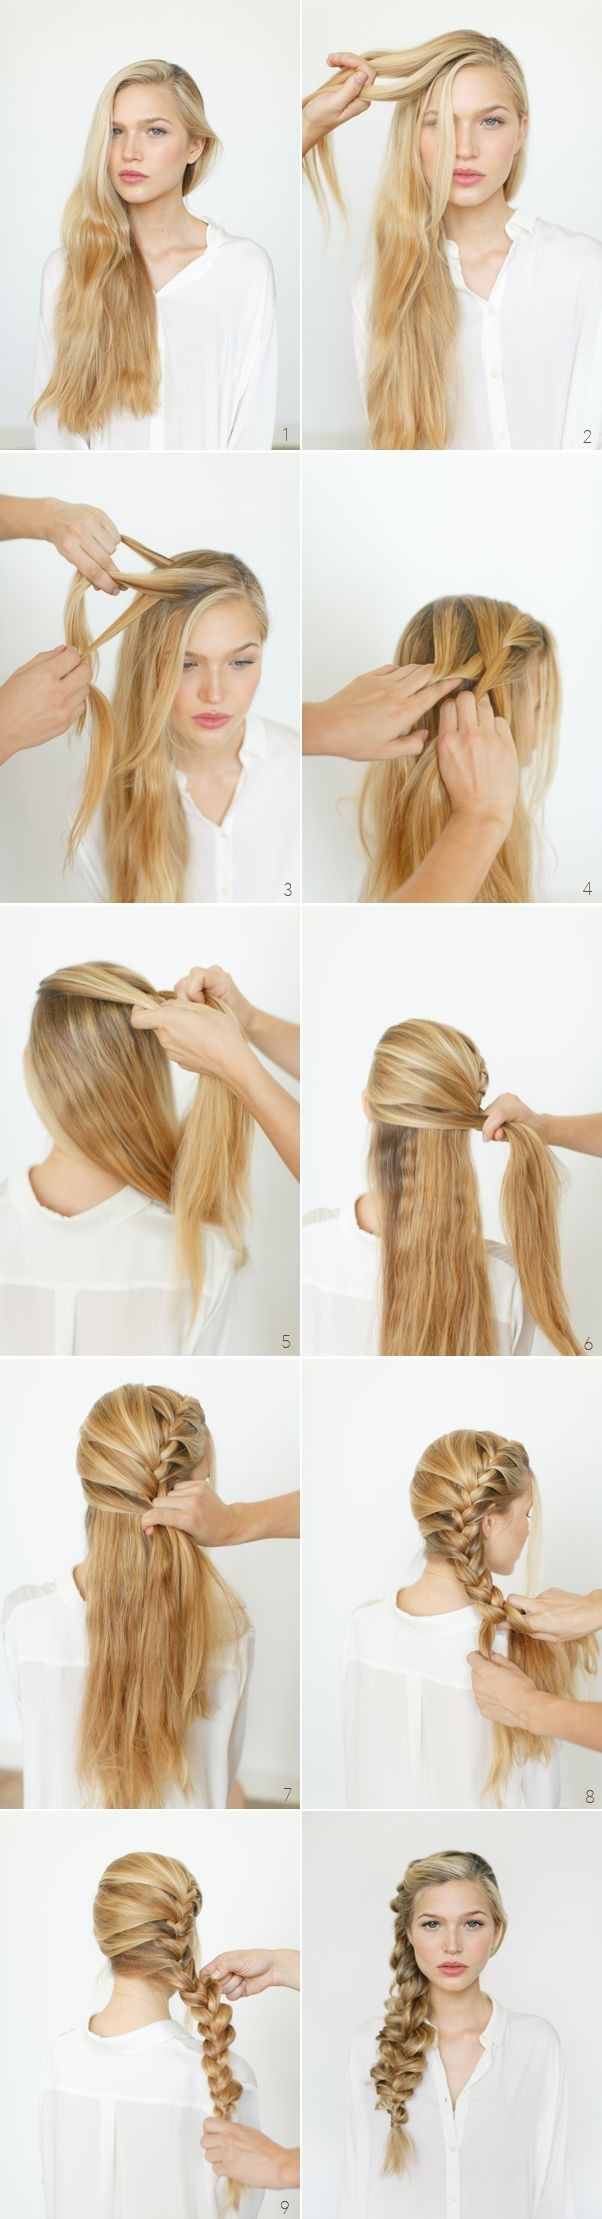 Romantic side braid hairstyle tutorial